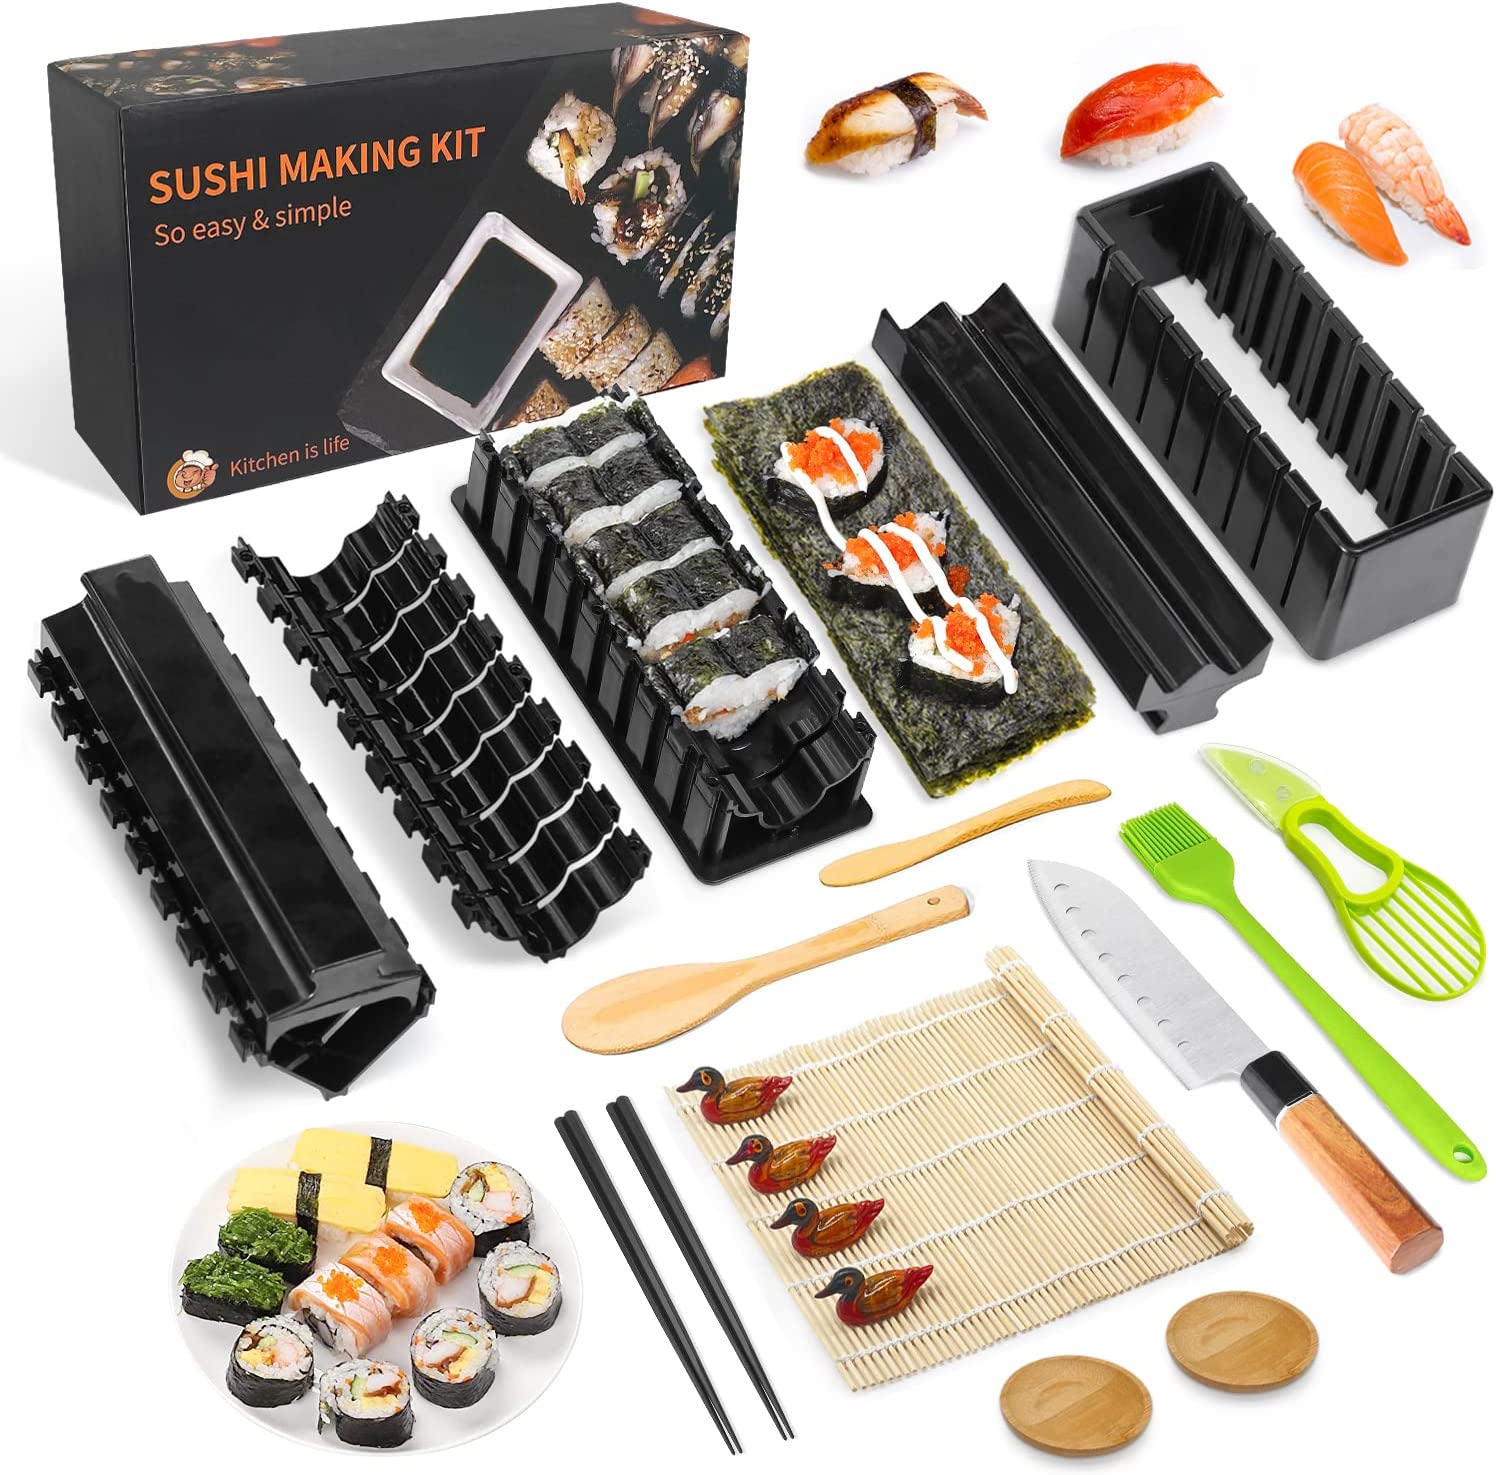 Kit de fabrication de sushi et maki - Kit de machine Maroc